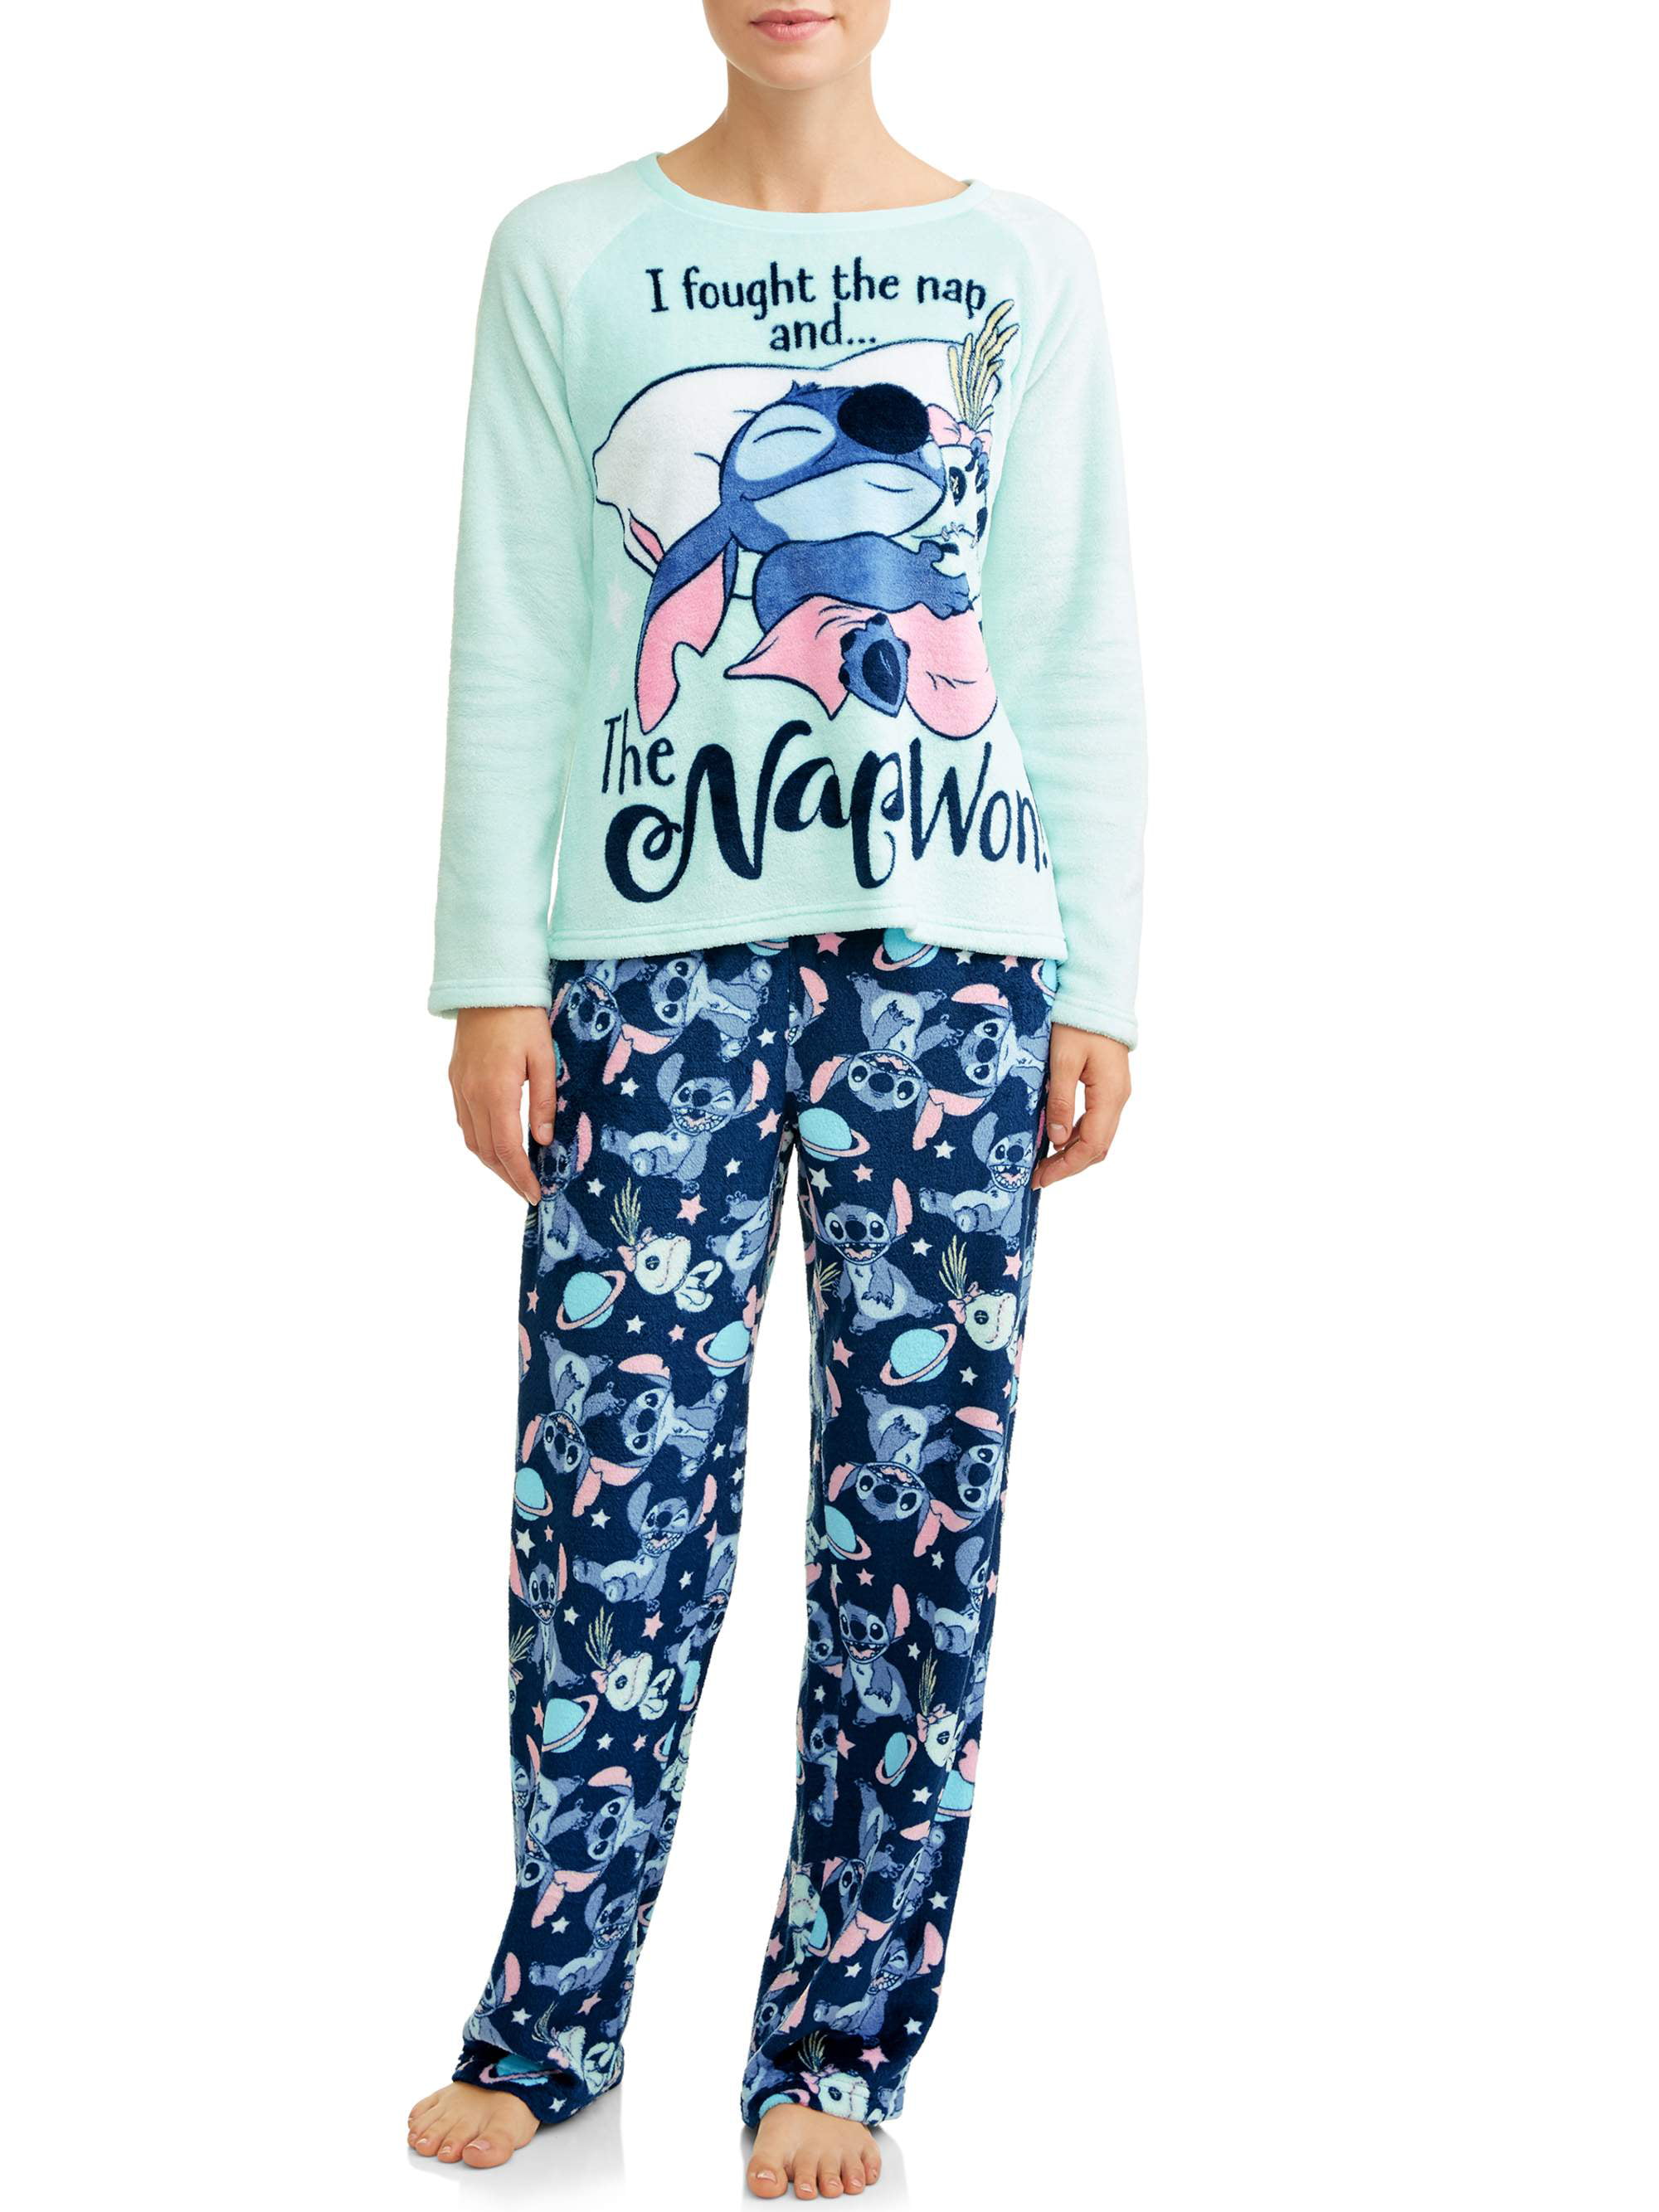 Venta > lilo and stitch pijamas > en stock